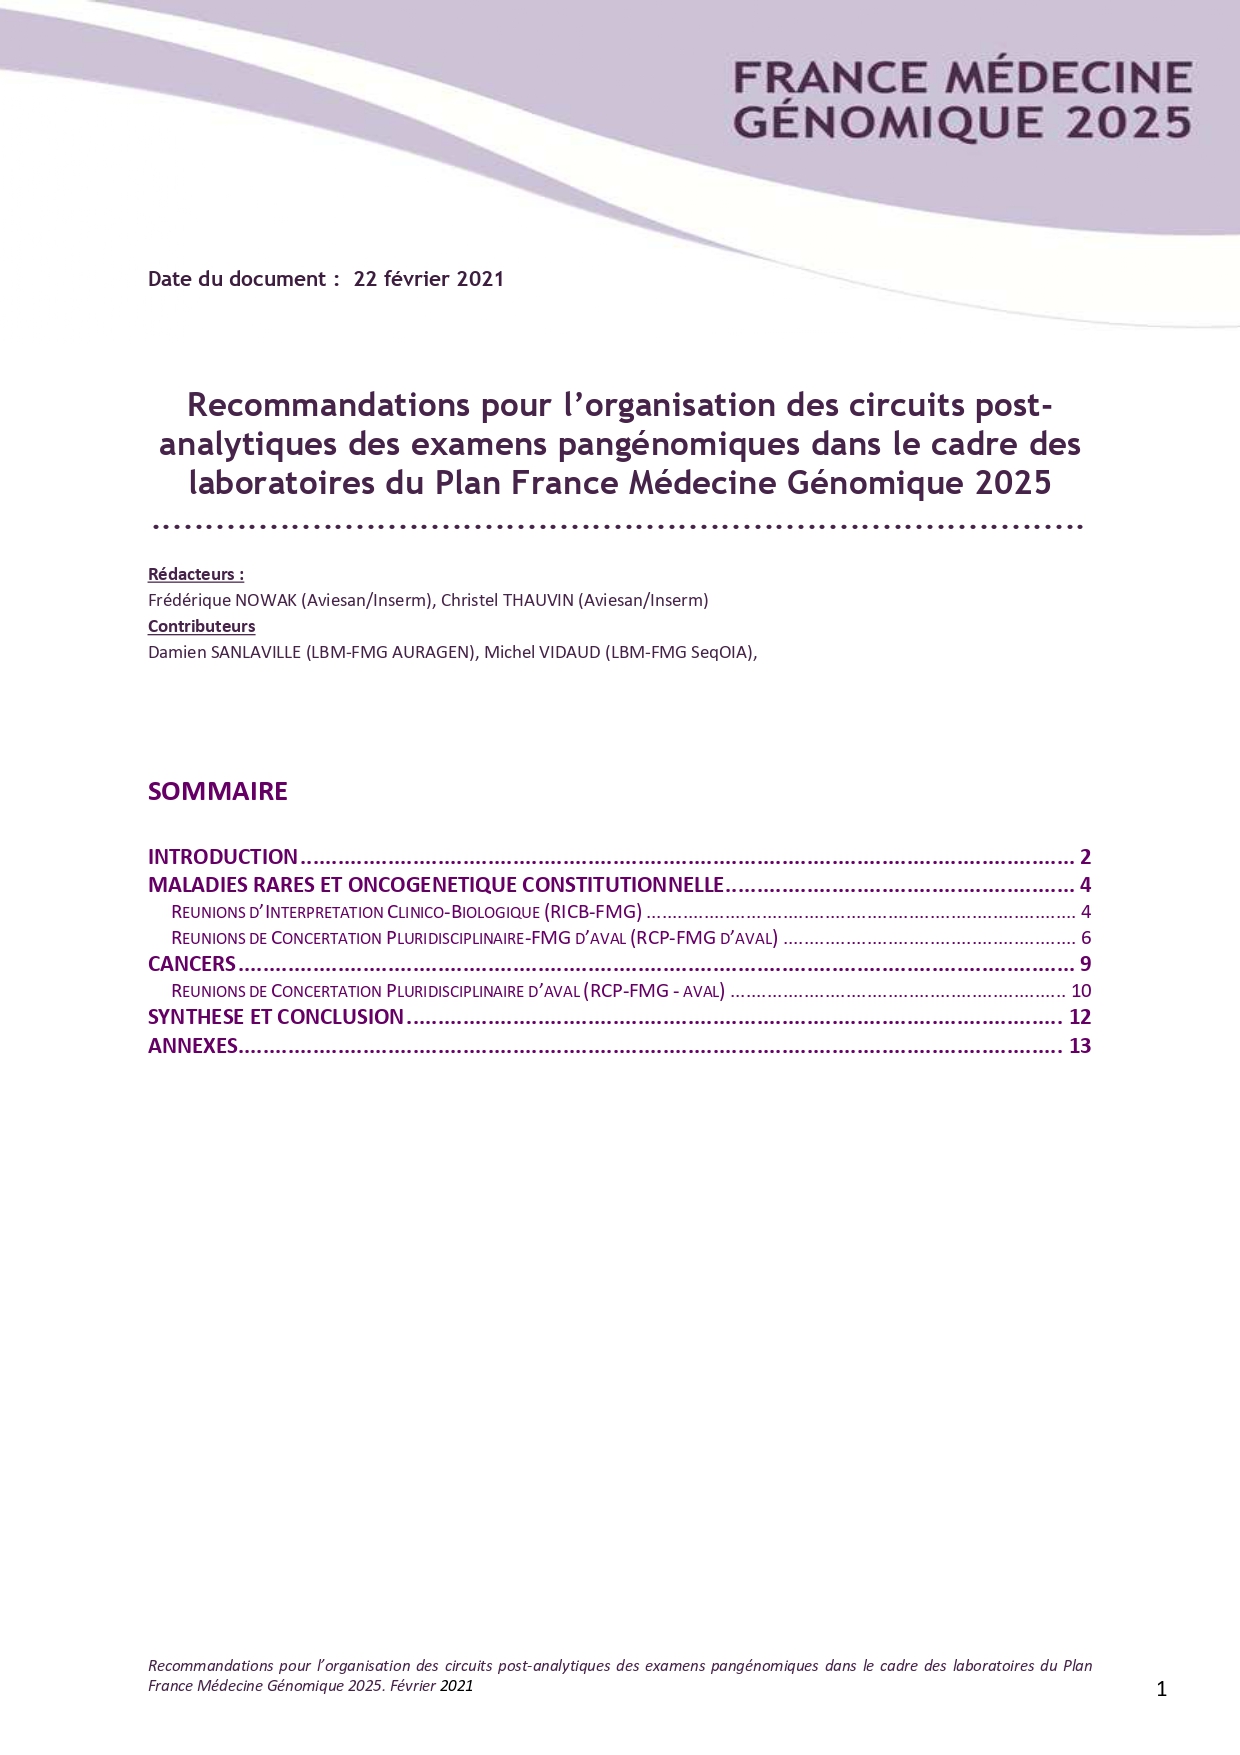 PMFG 2025 : Recommandations pour l'organisation